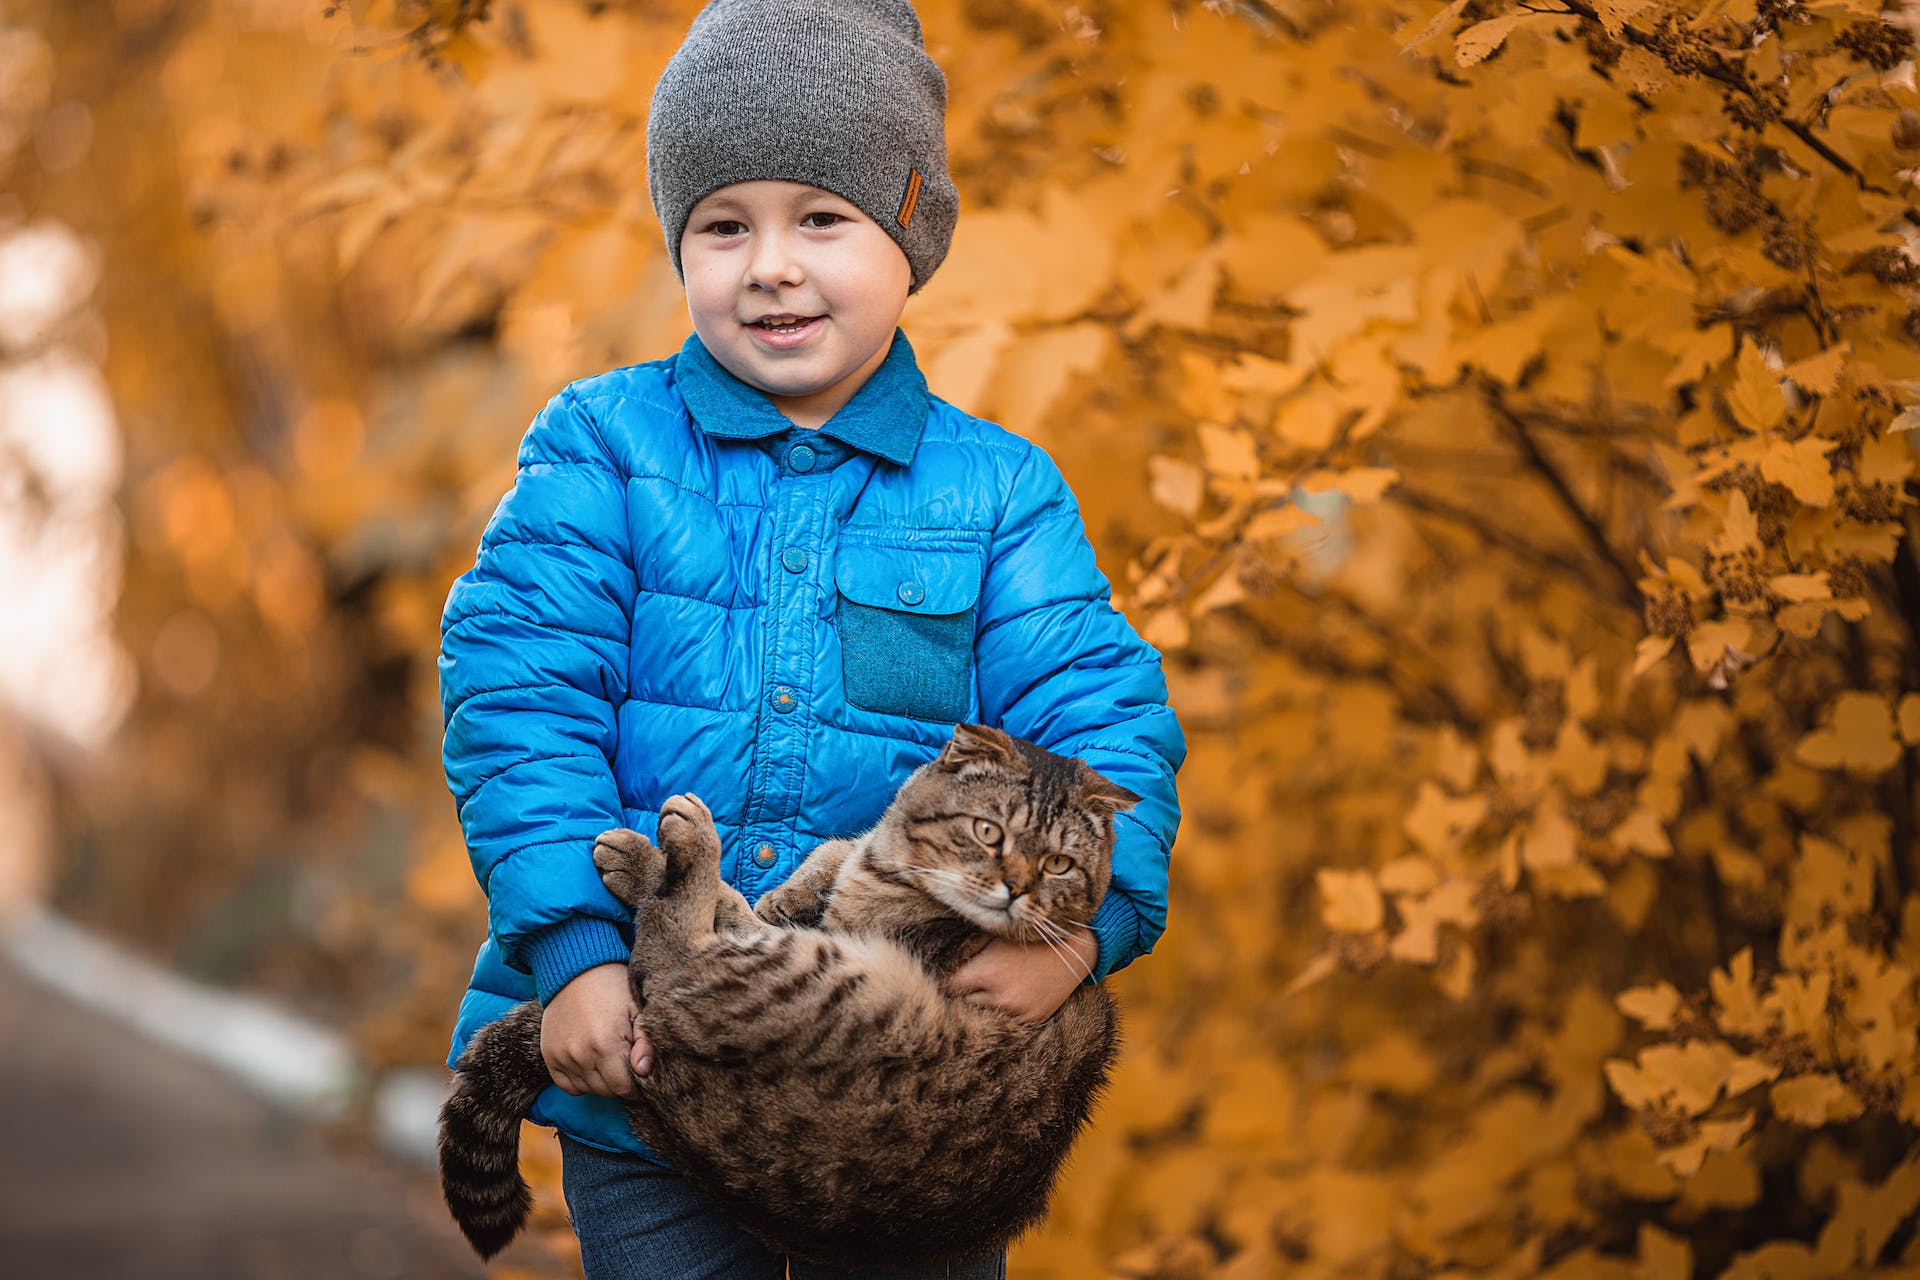 A boy carrying a cat outdoors on a walk